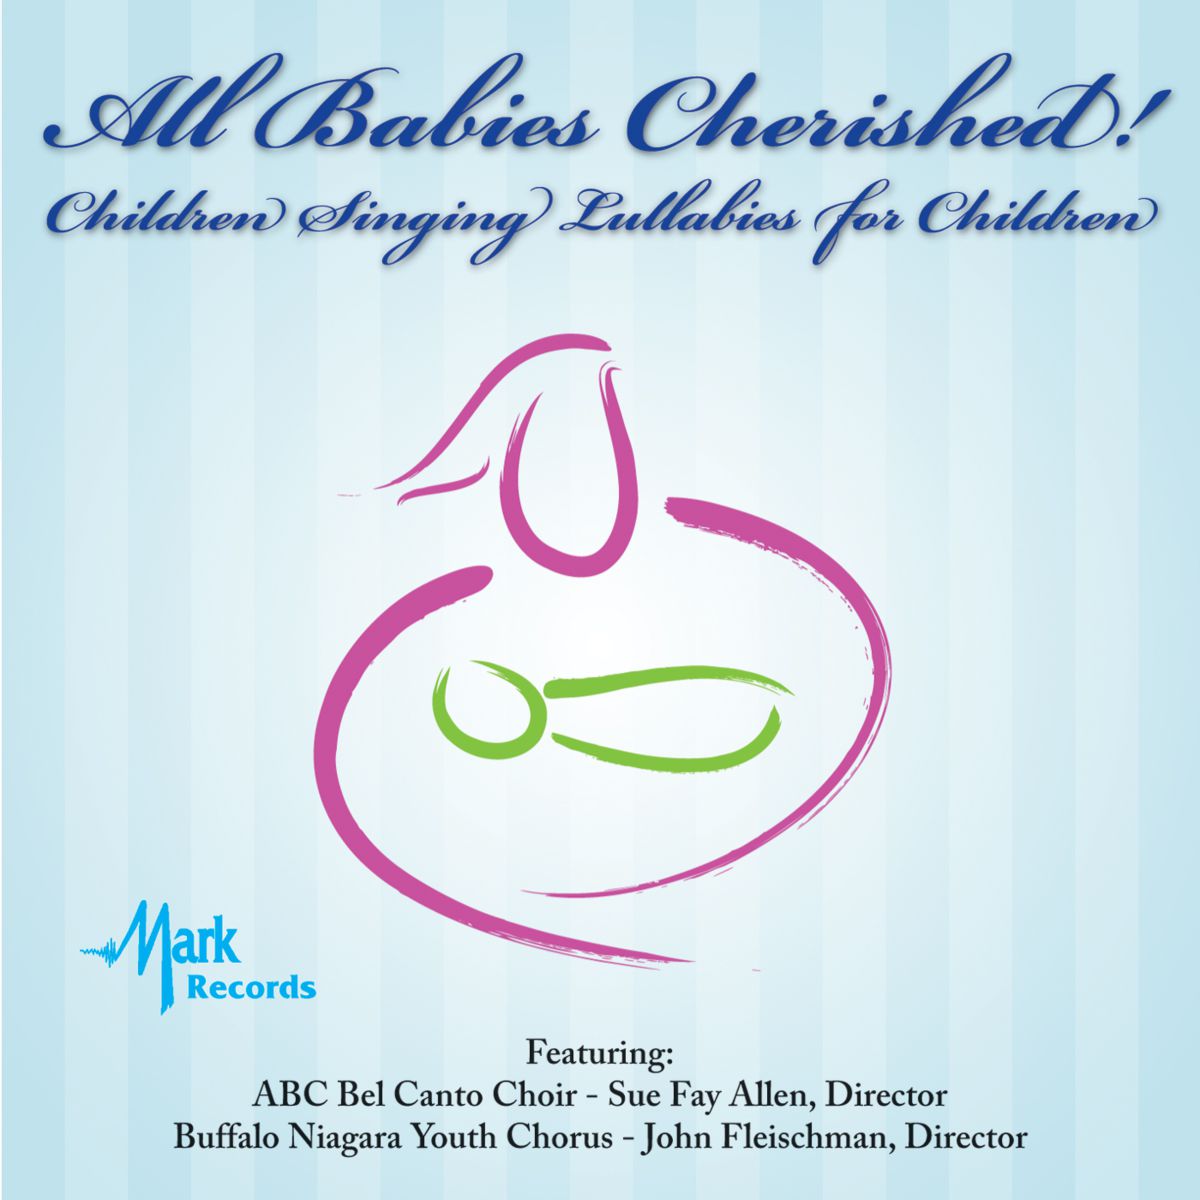 All Babies Cherished! Children Singing Lullabies for Children - cliquer ici